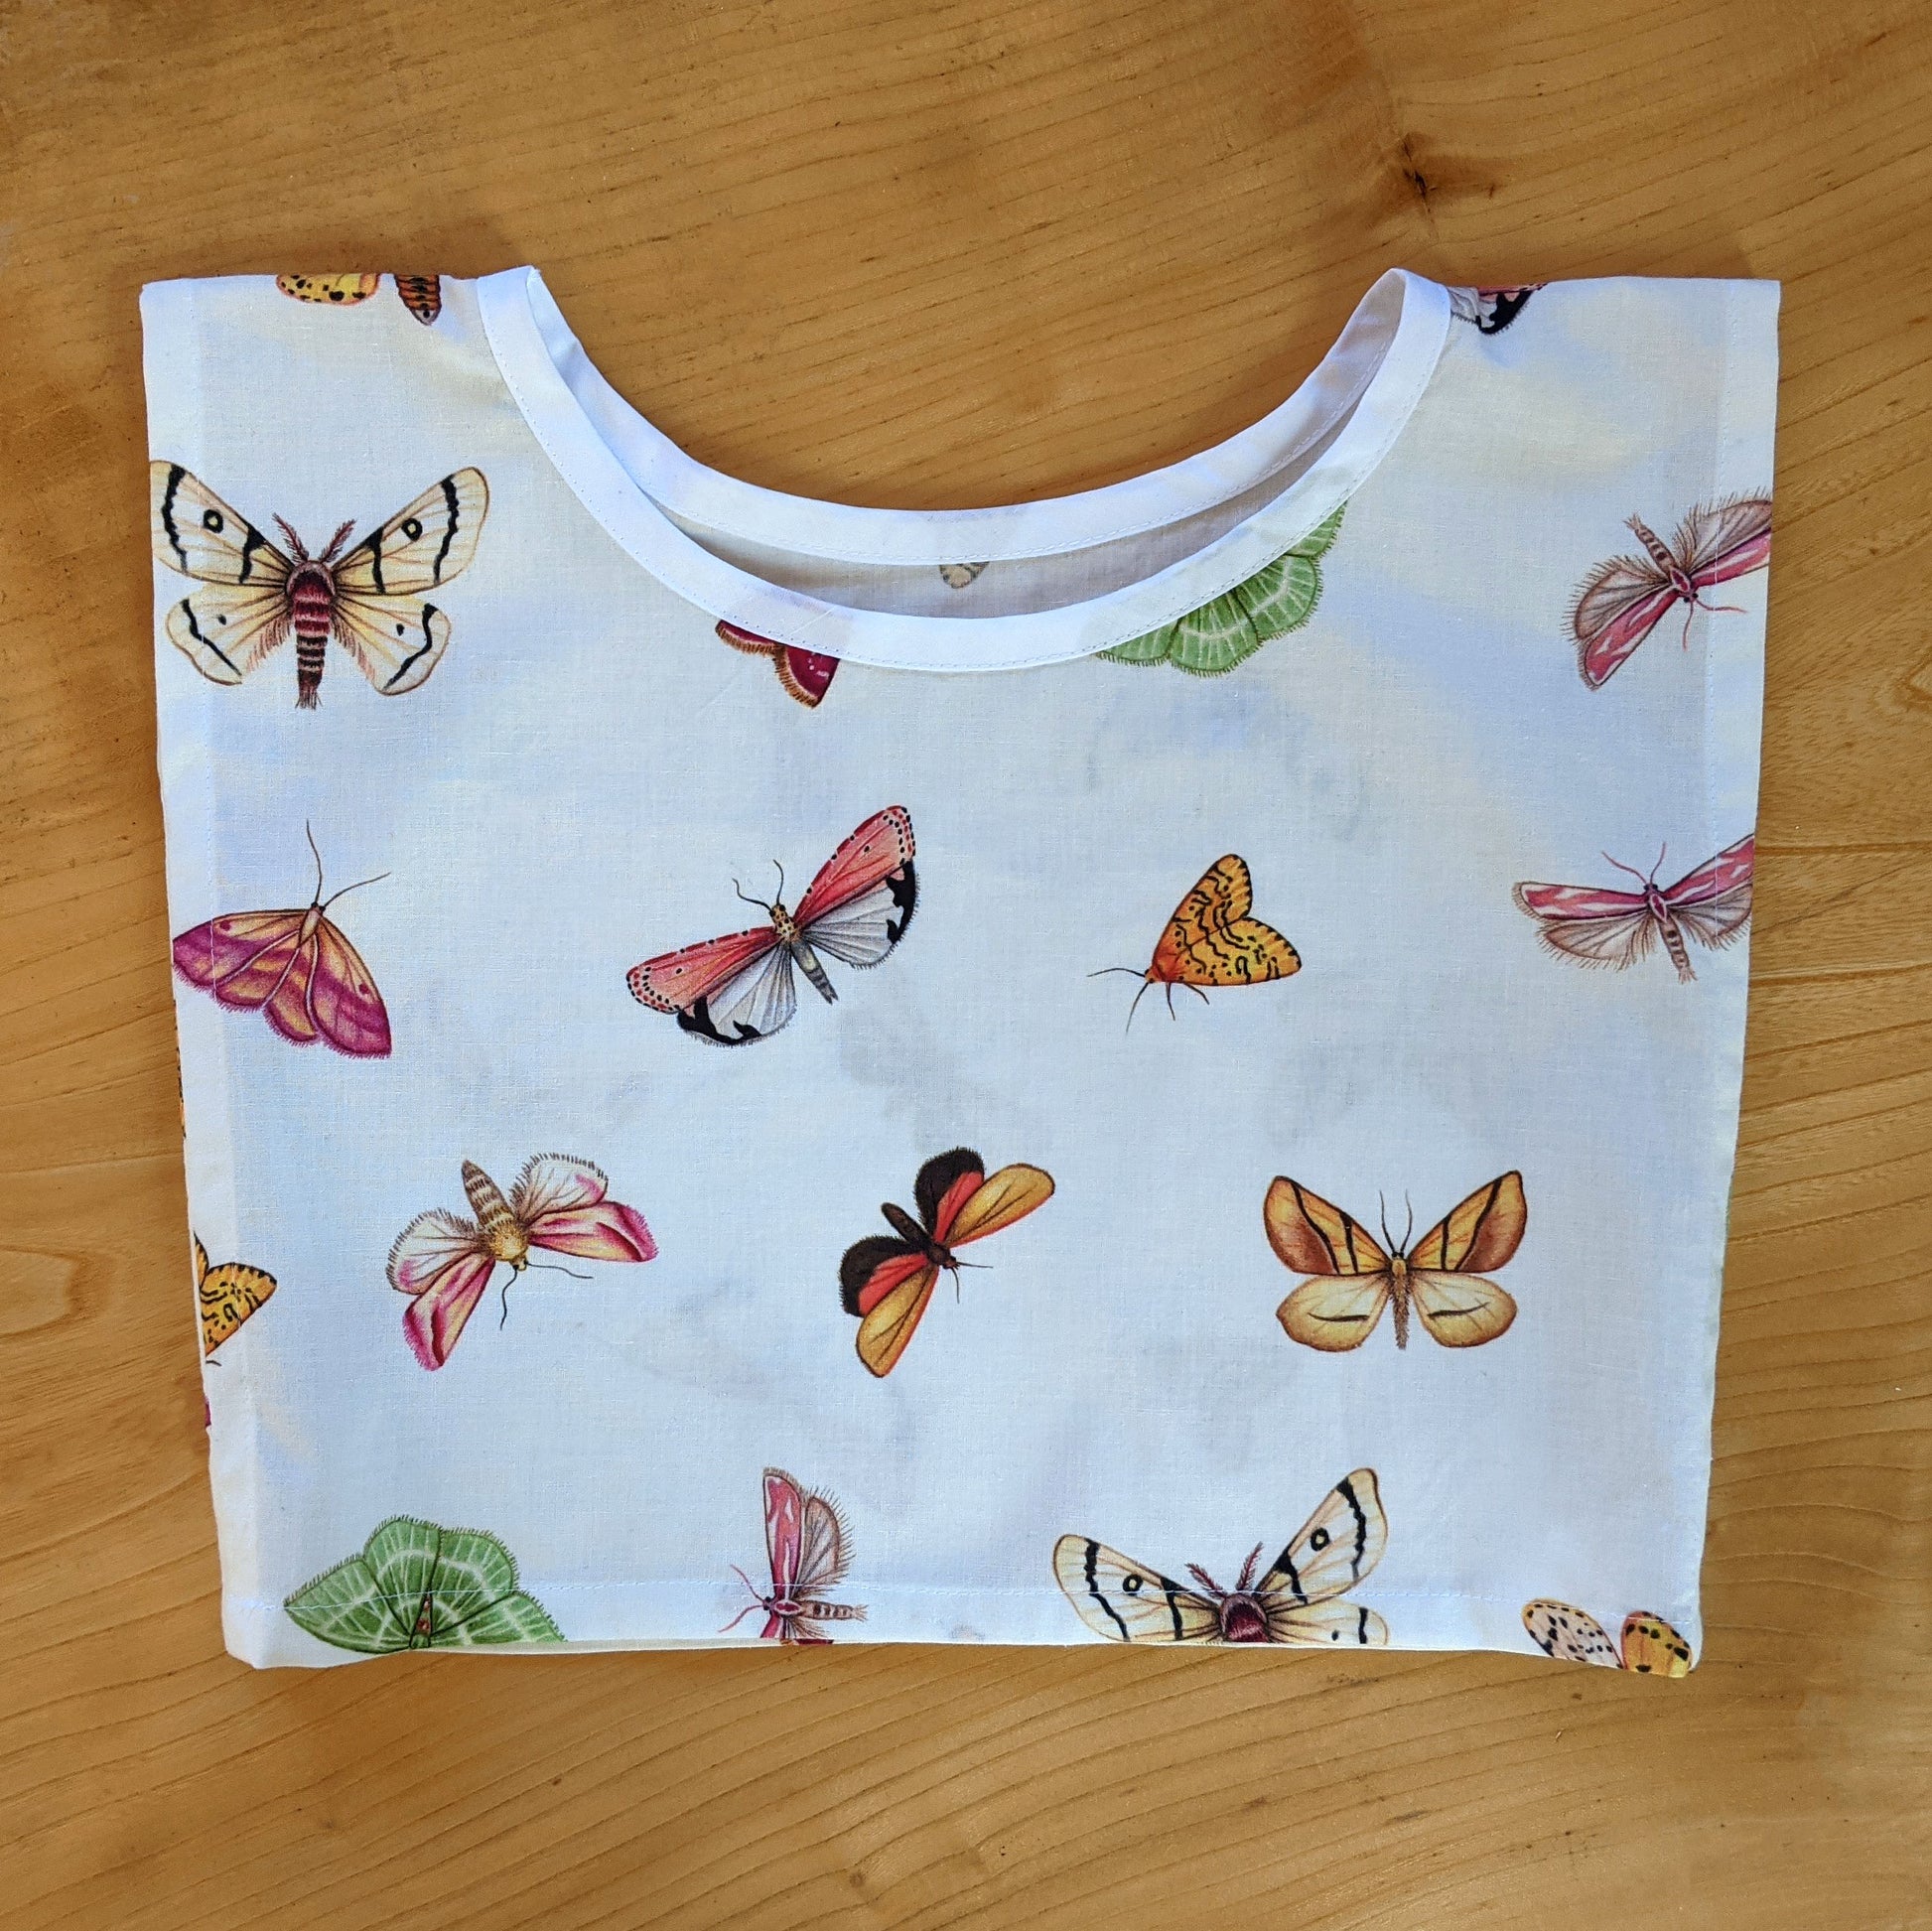 Girls patterned blouse. Moth print